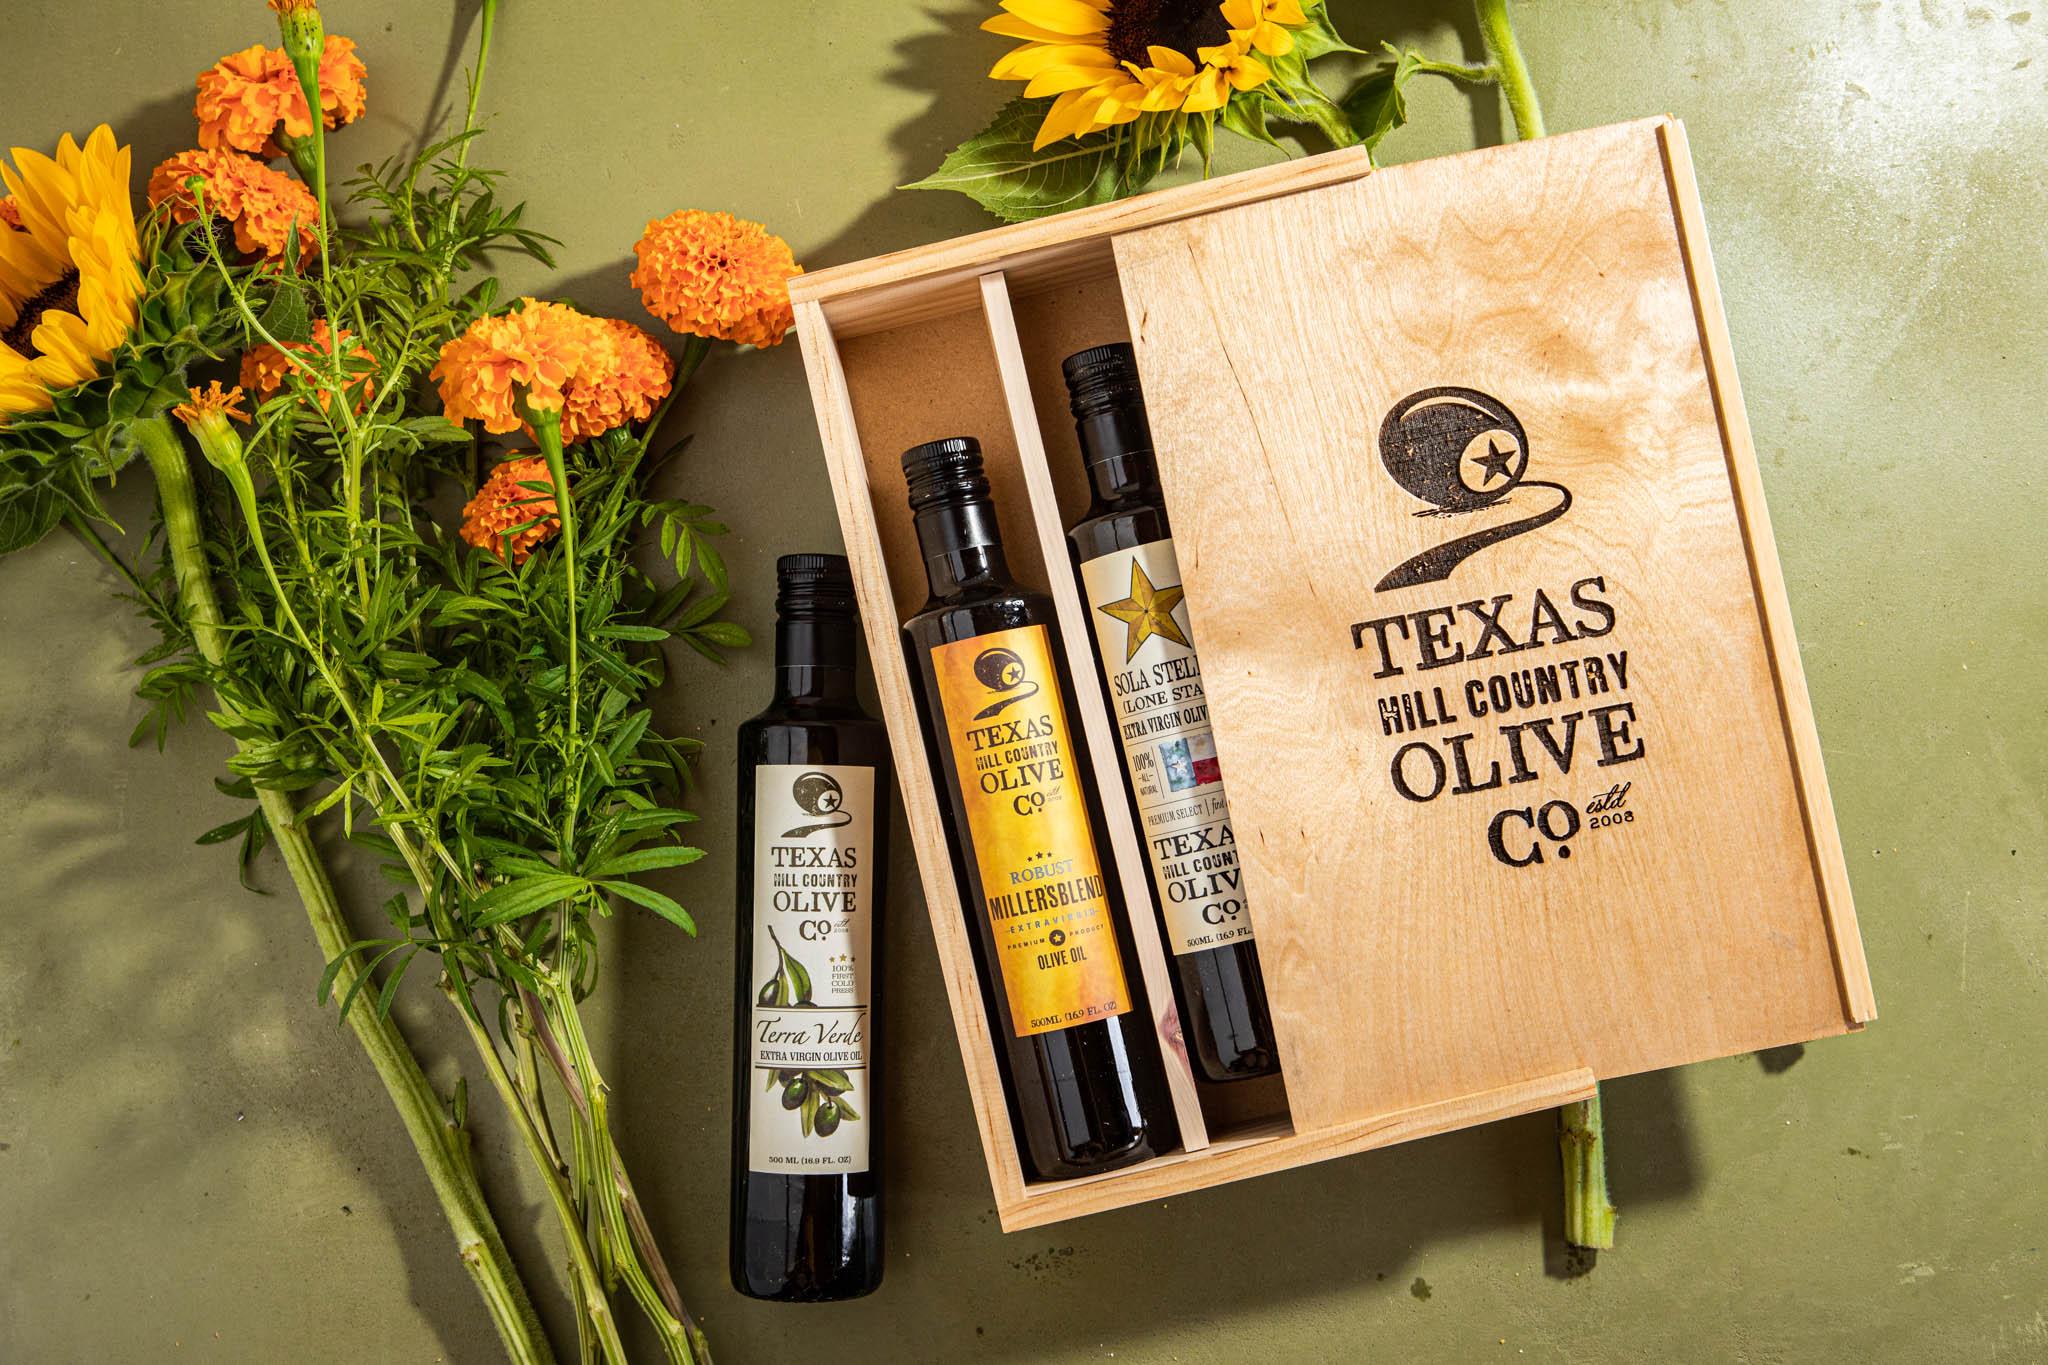 Texas olive oil